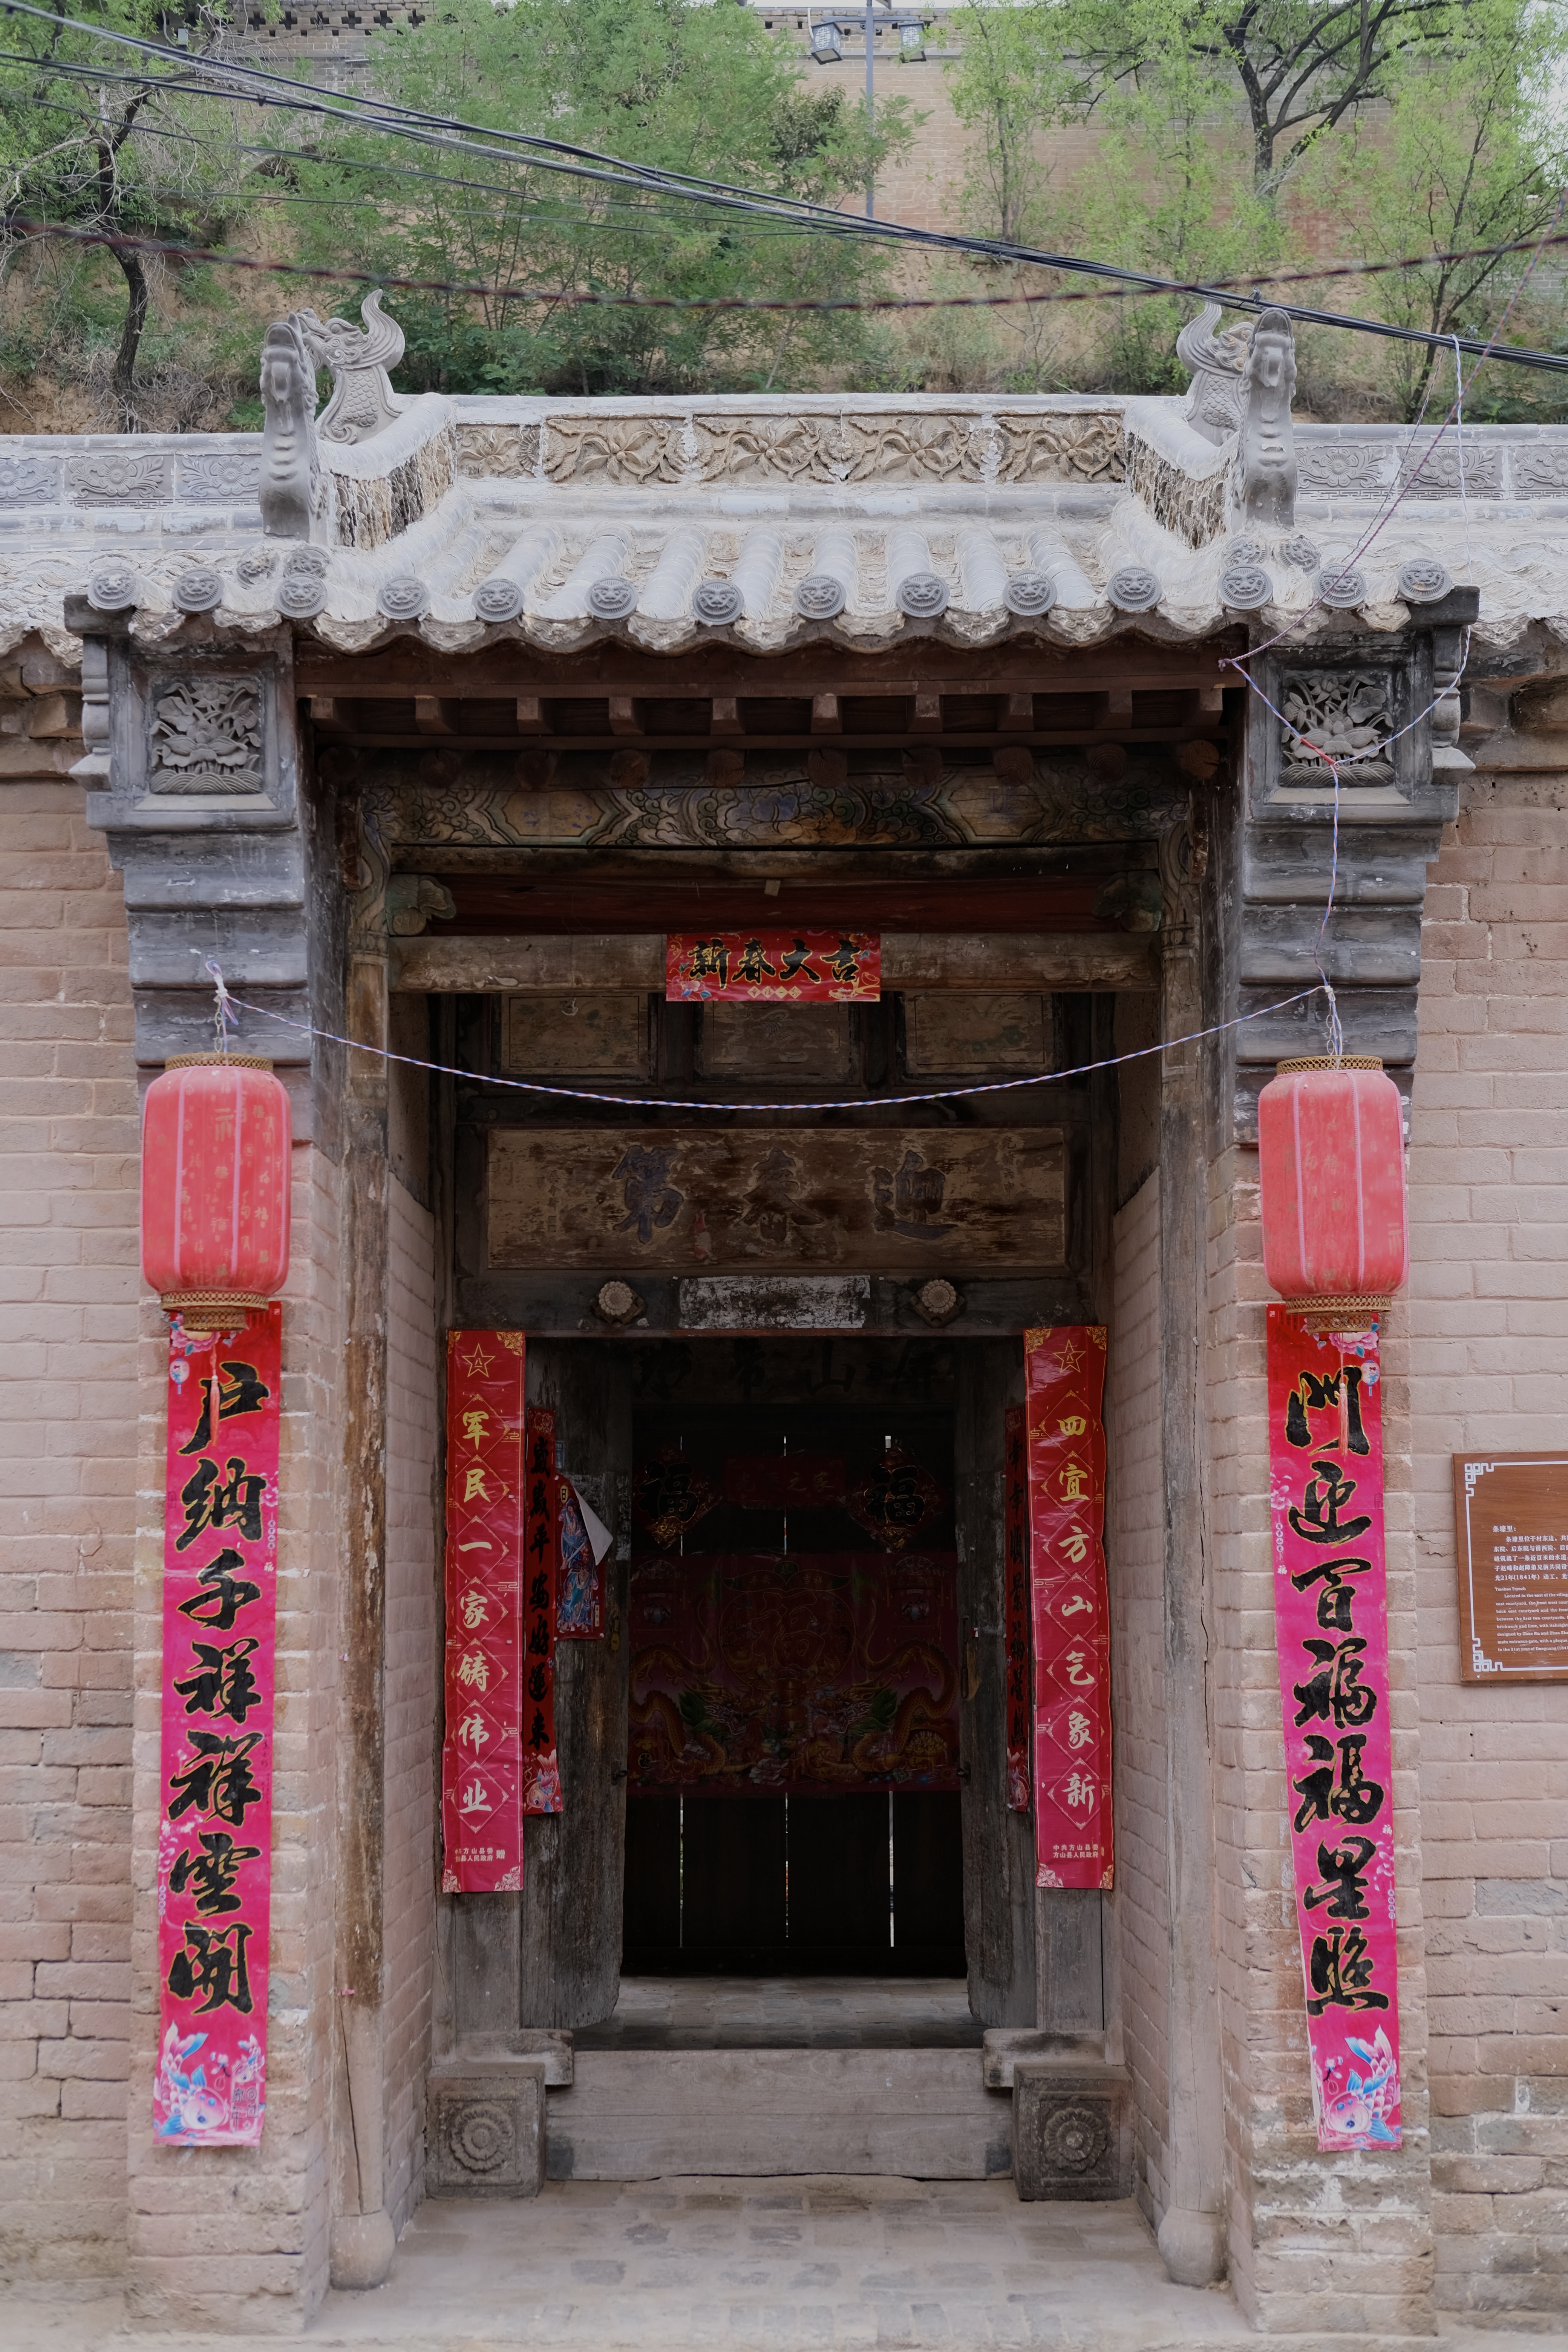 Explore the ancient underground tunnels beneath Shanxi's Zhangjiata Village